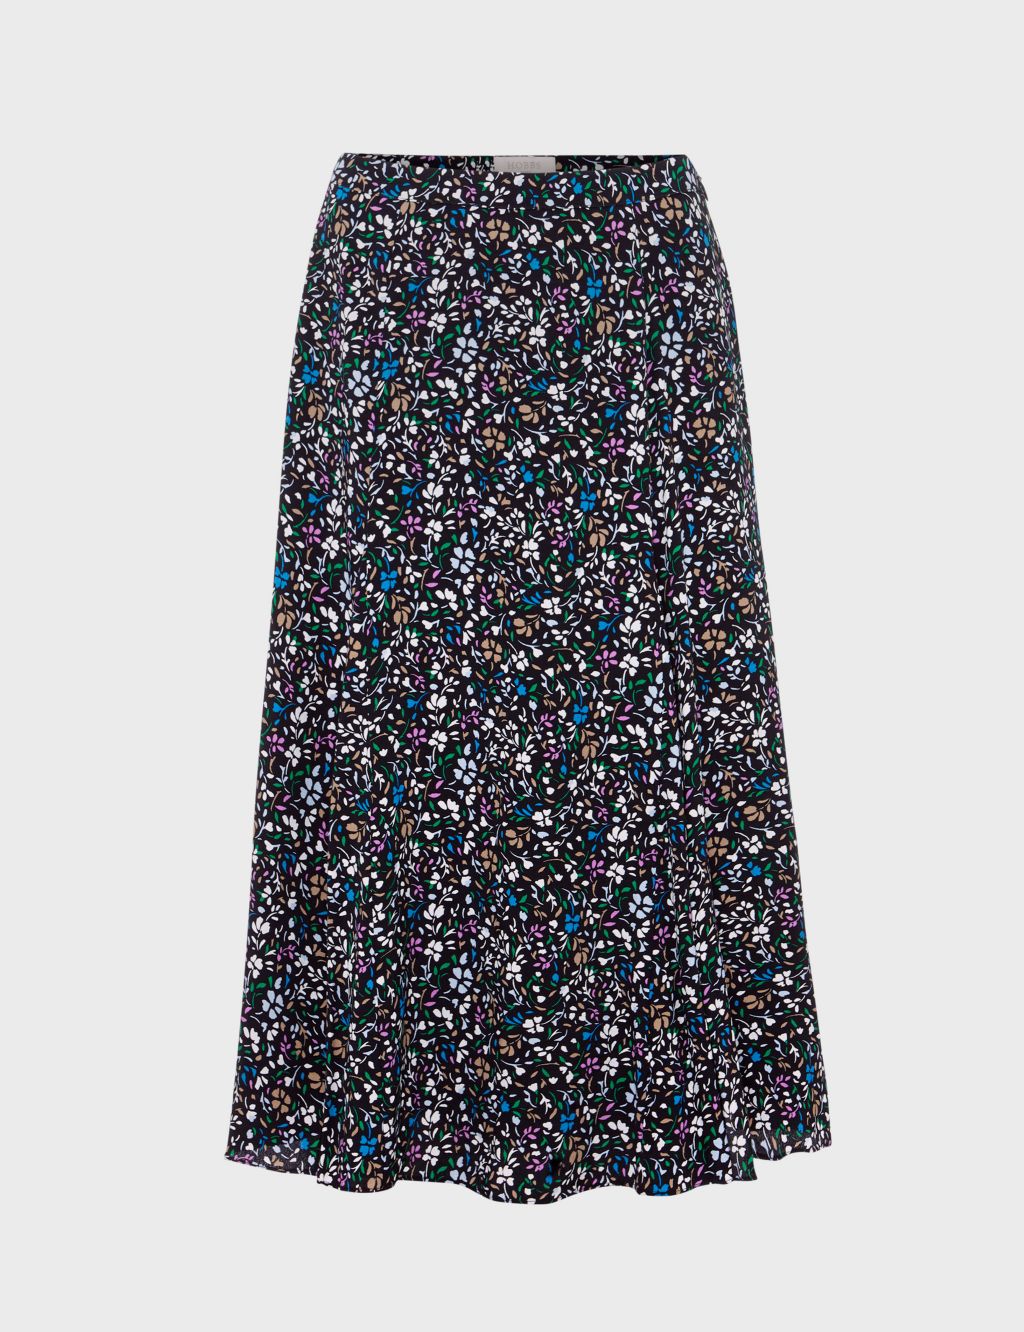 Floral Midi A-Line Skirt image 2